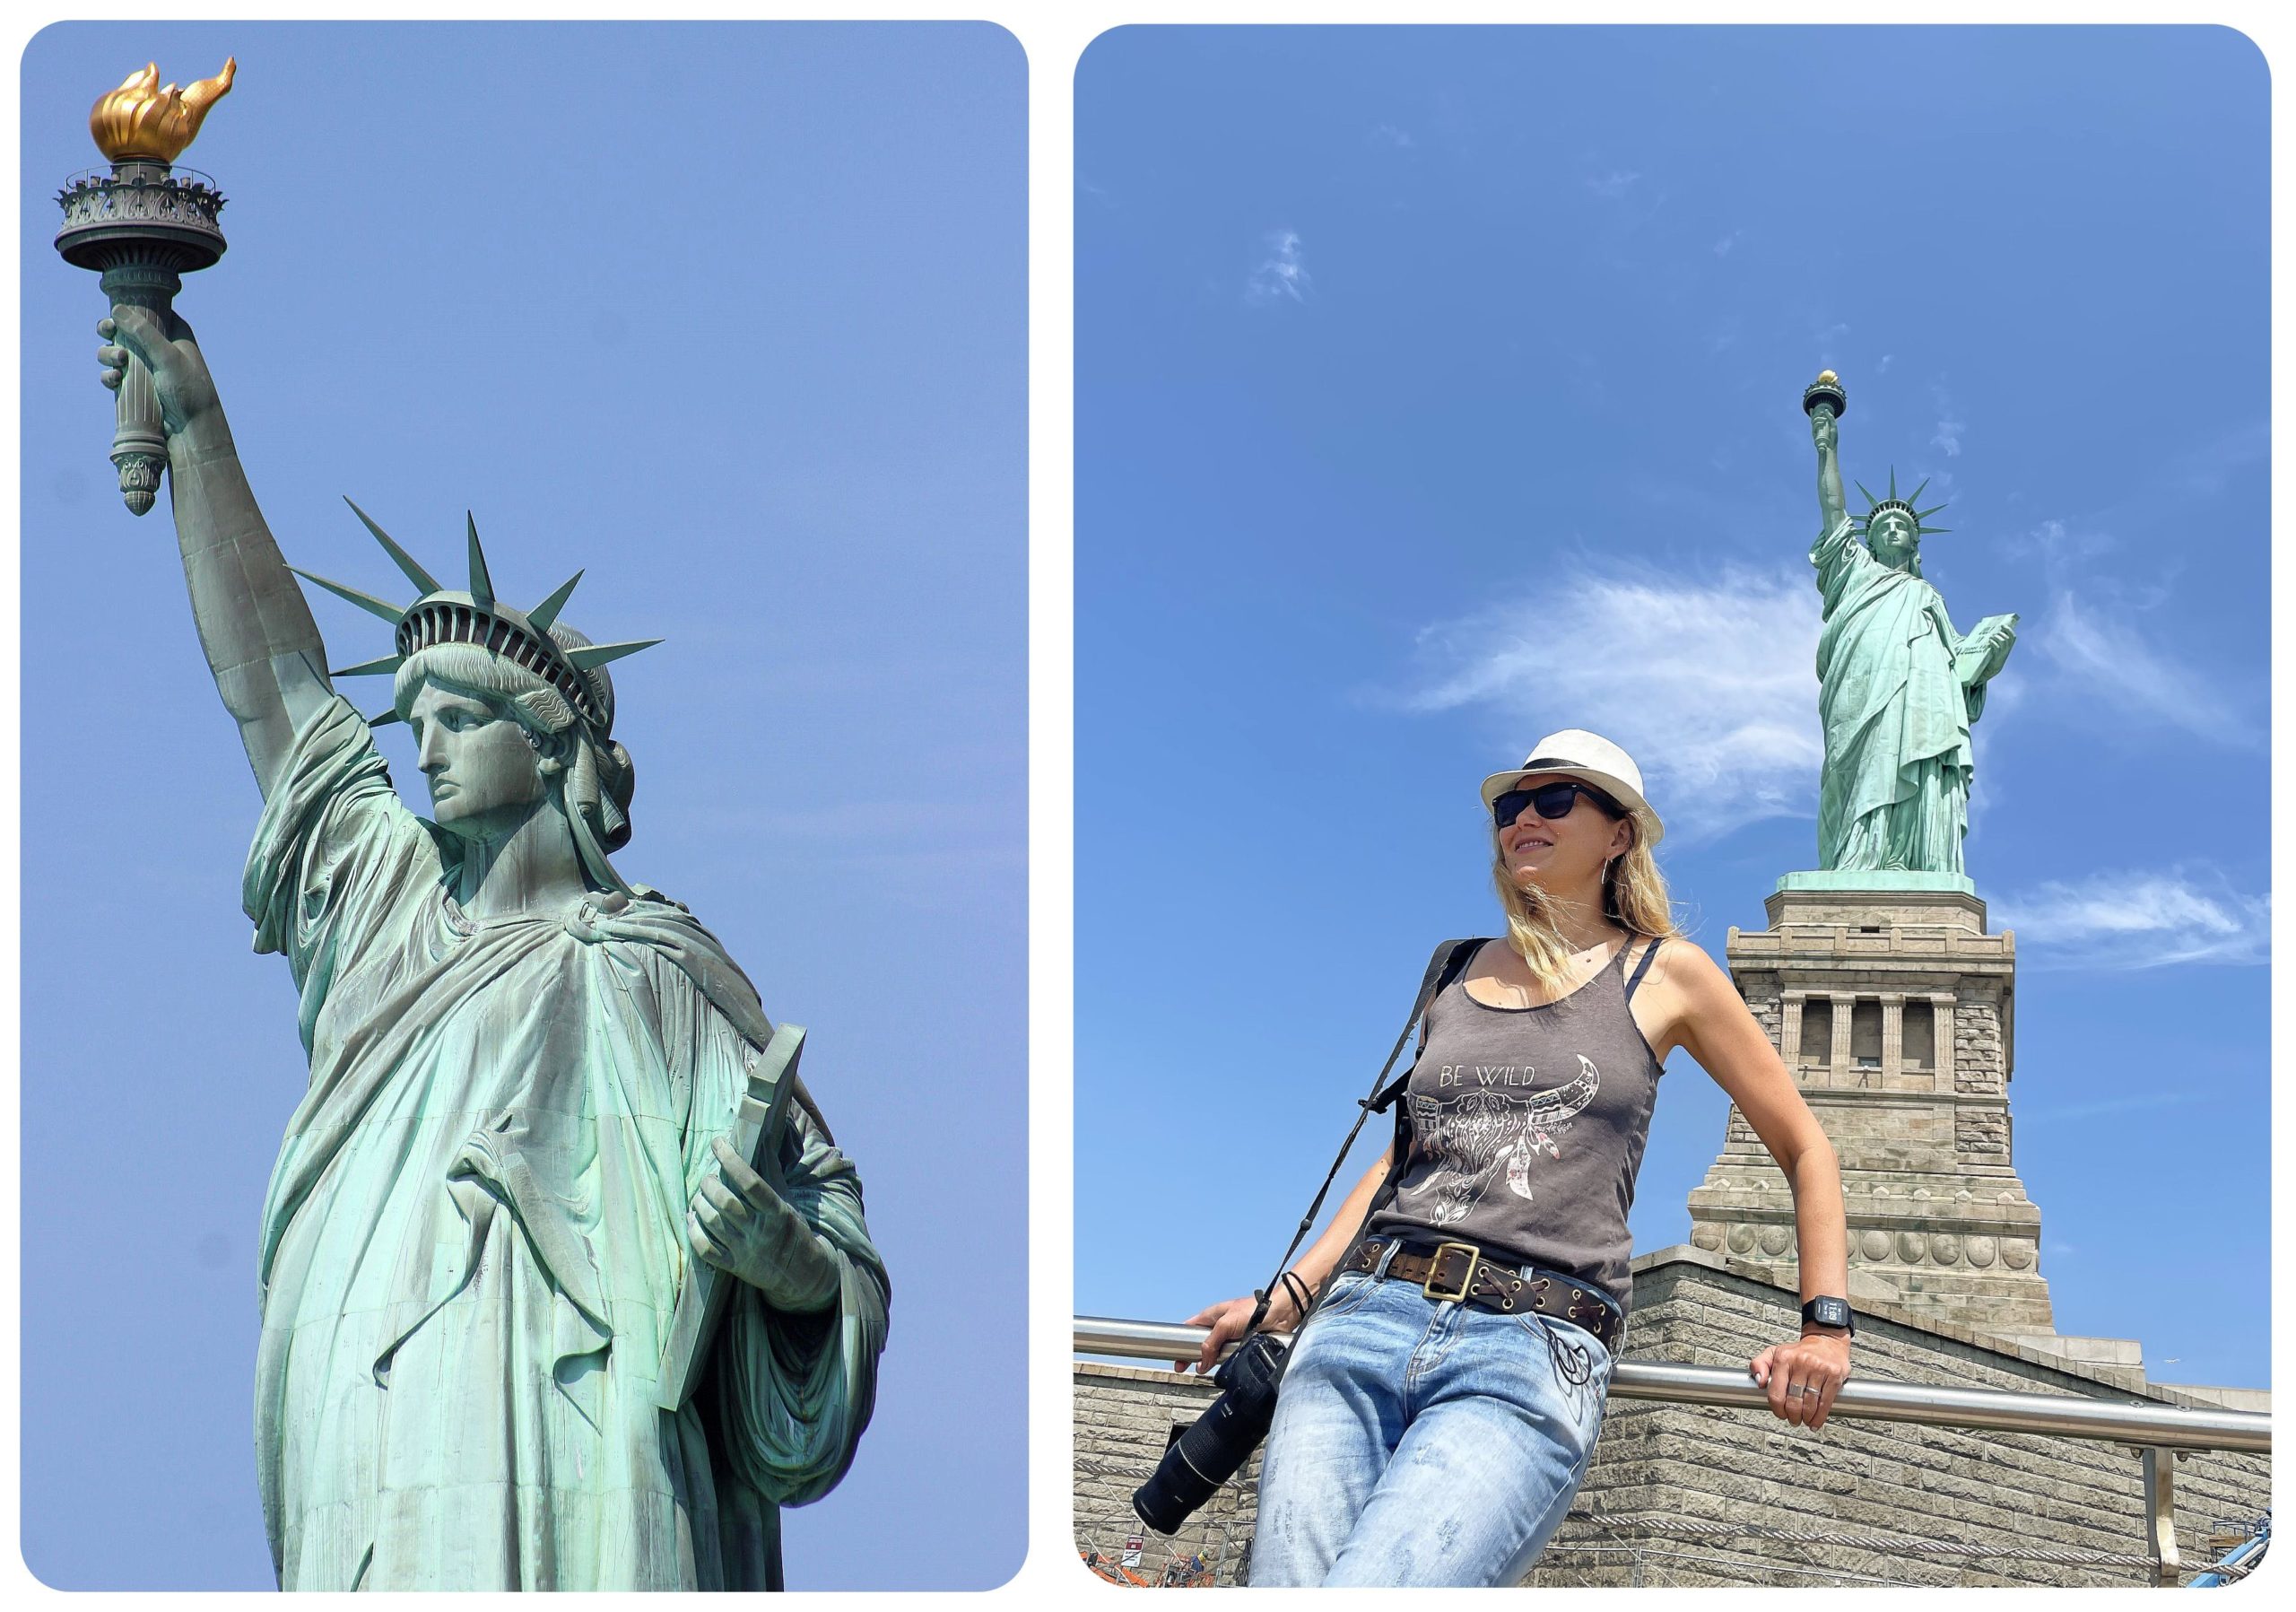 Statue Of Liberty Tour